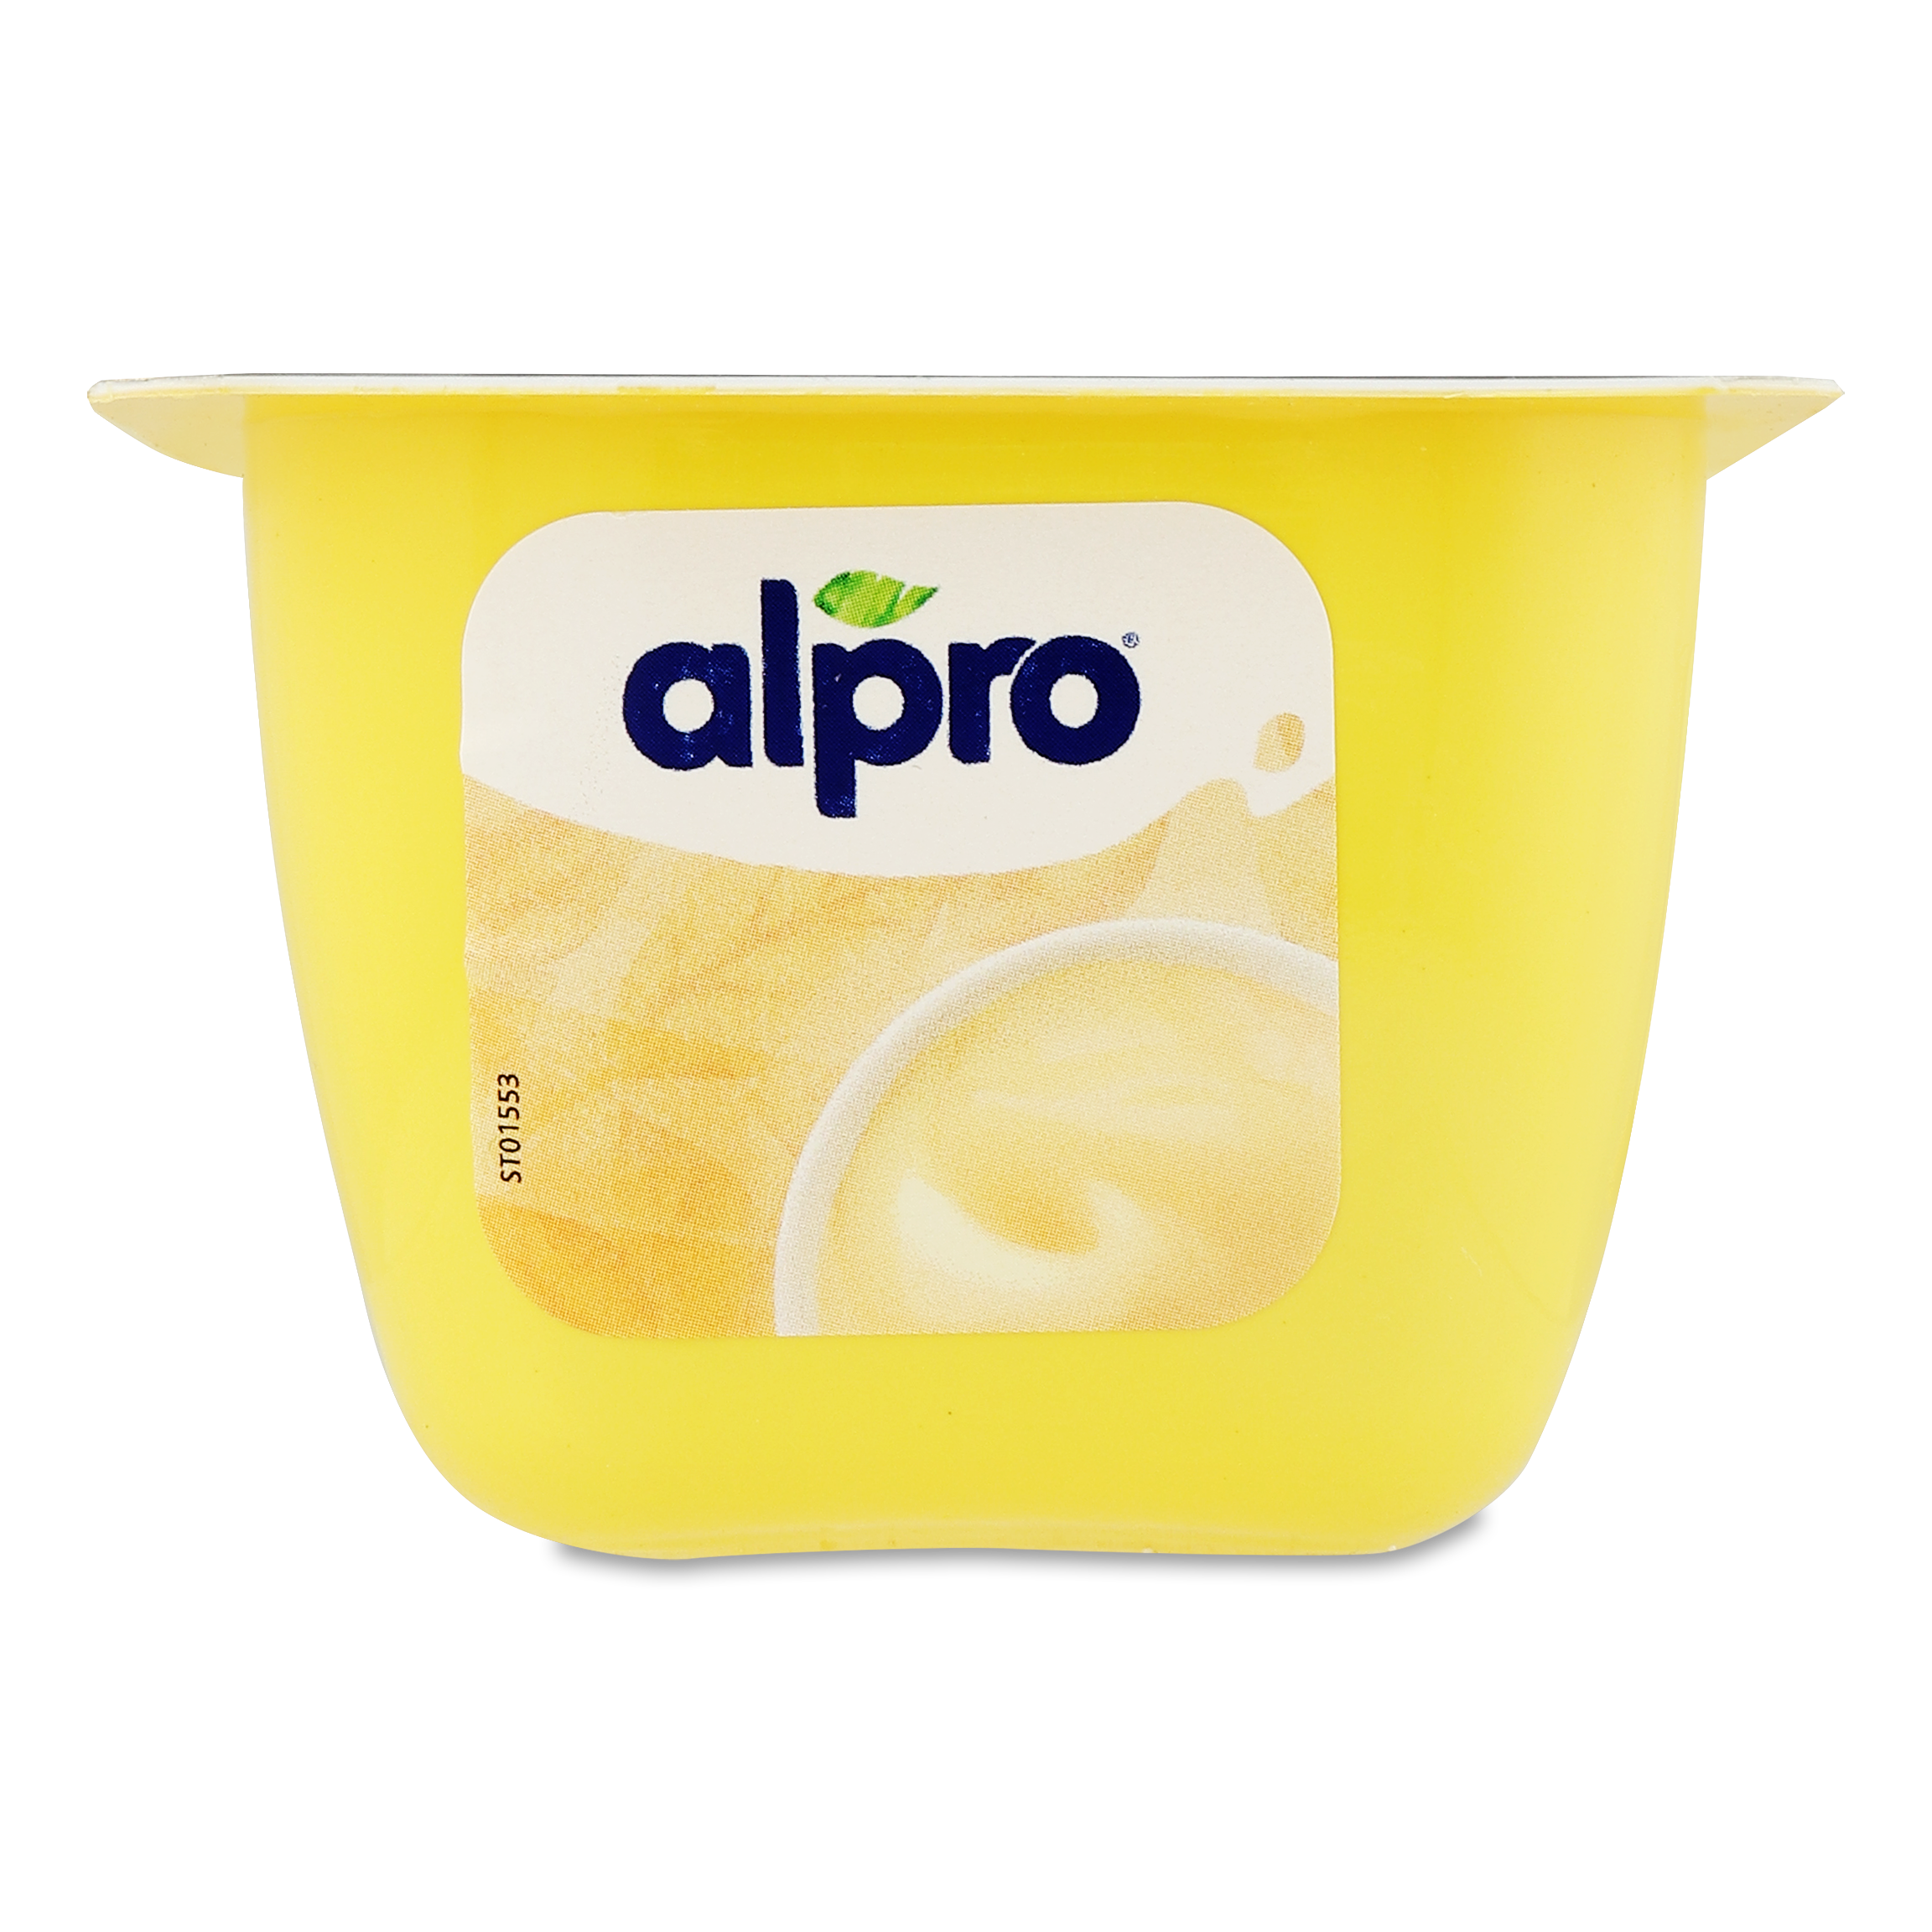 Alpro Lactose-Free Vanilla Soy Dessert 125g